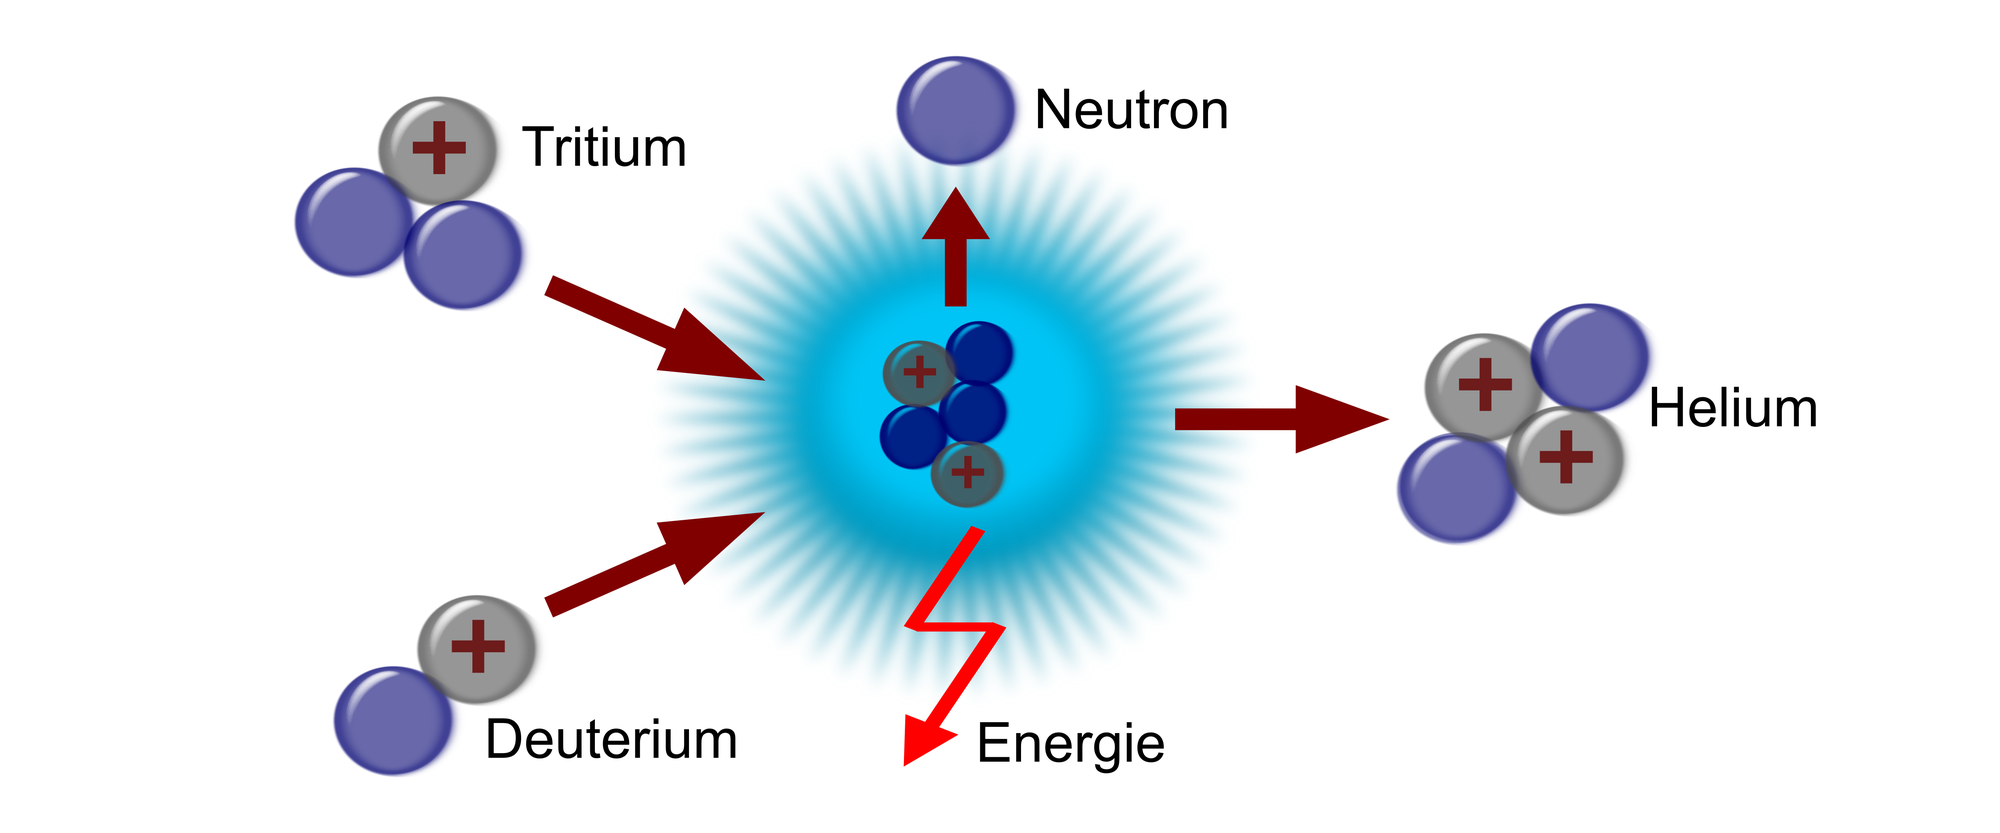 Kernfusion